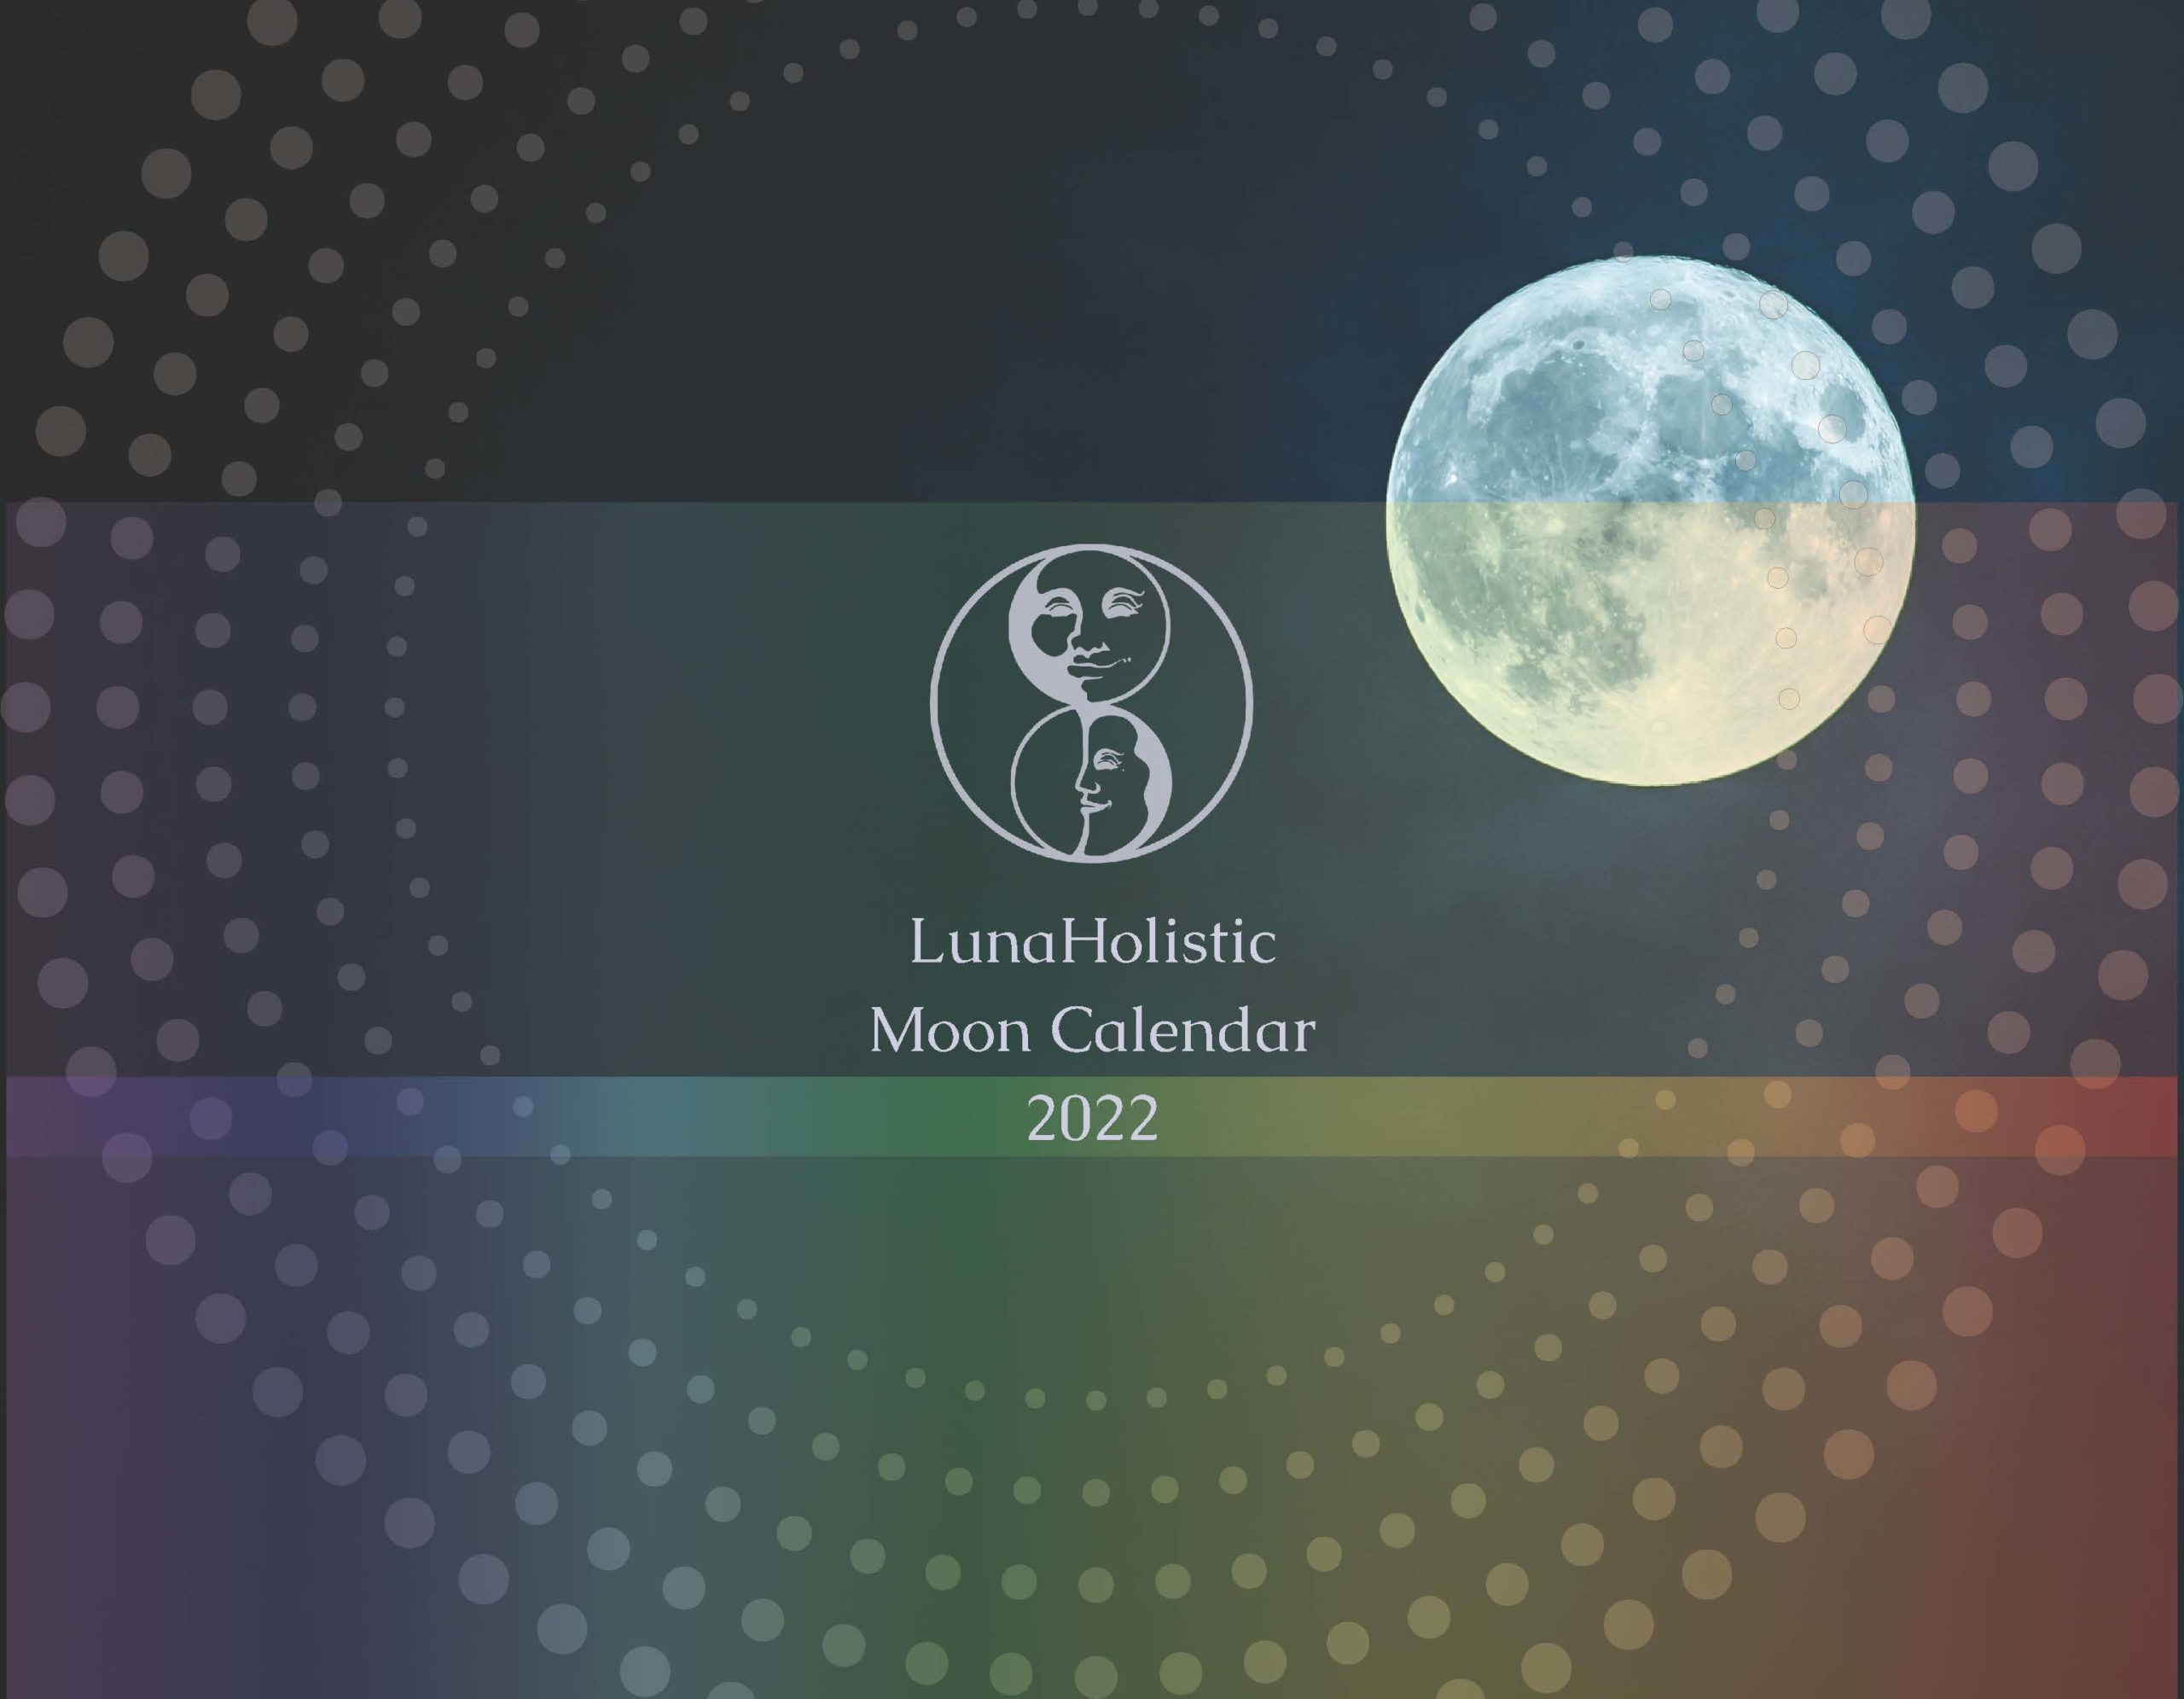 LunaHolistic Moon Calendar 2022 - Lunar Calendar 2022